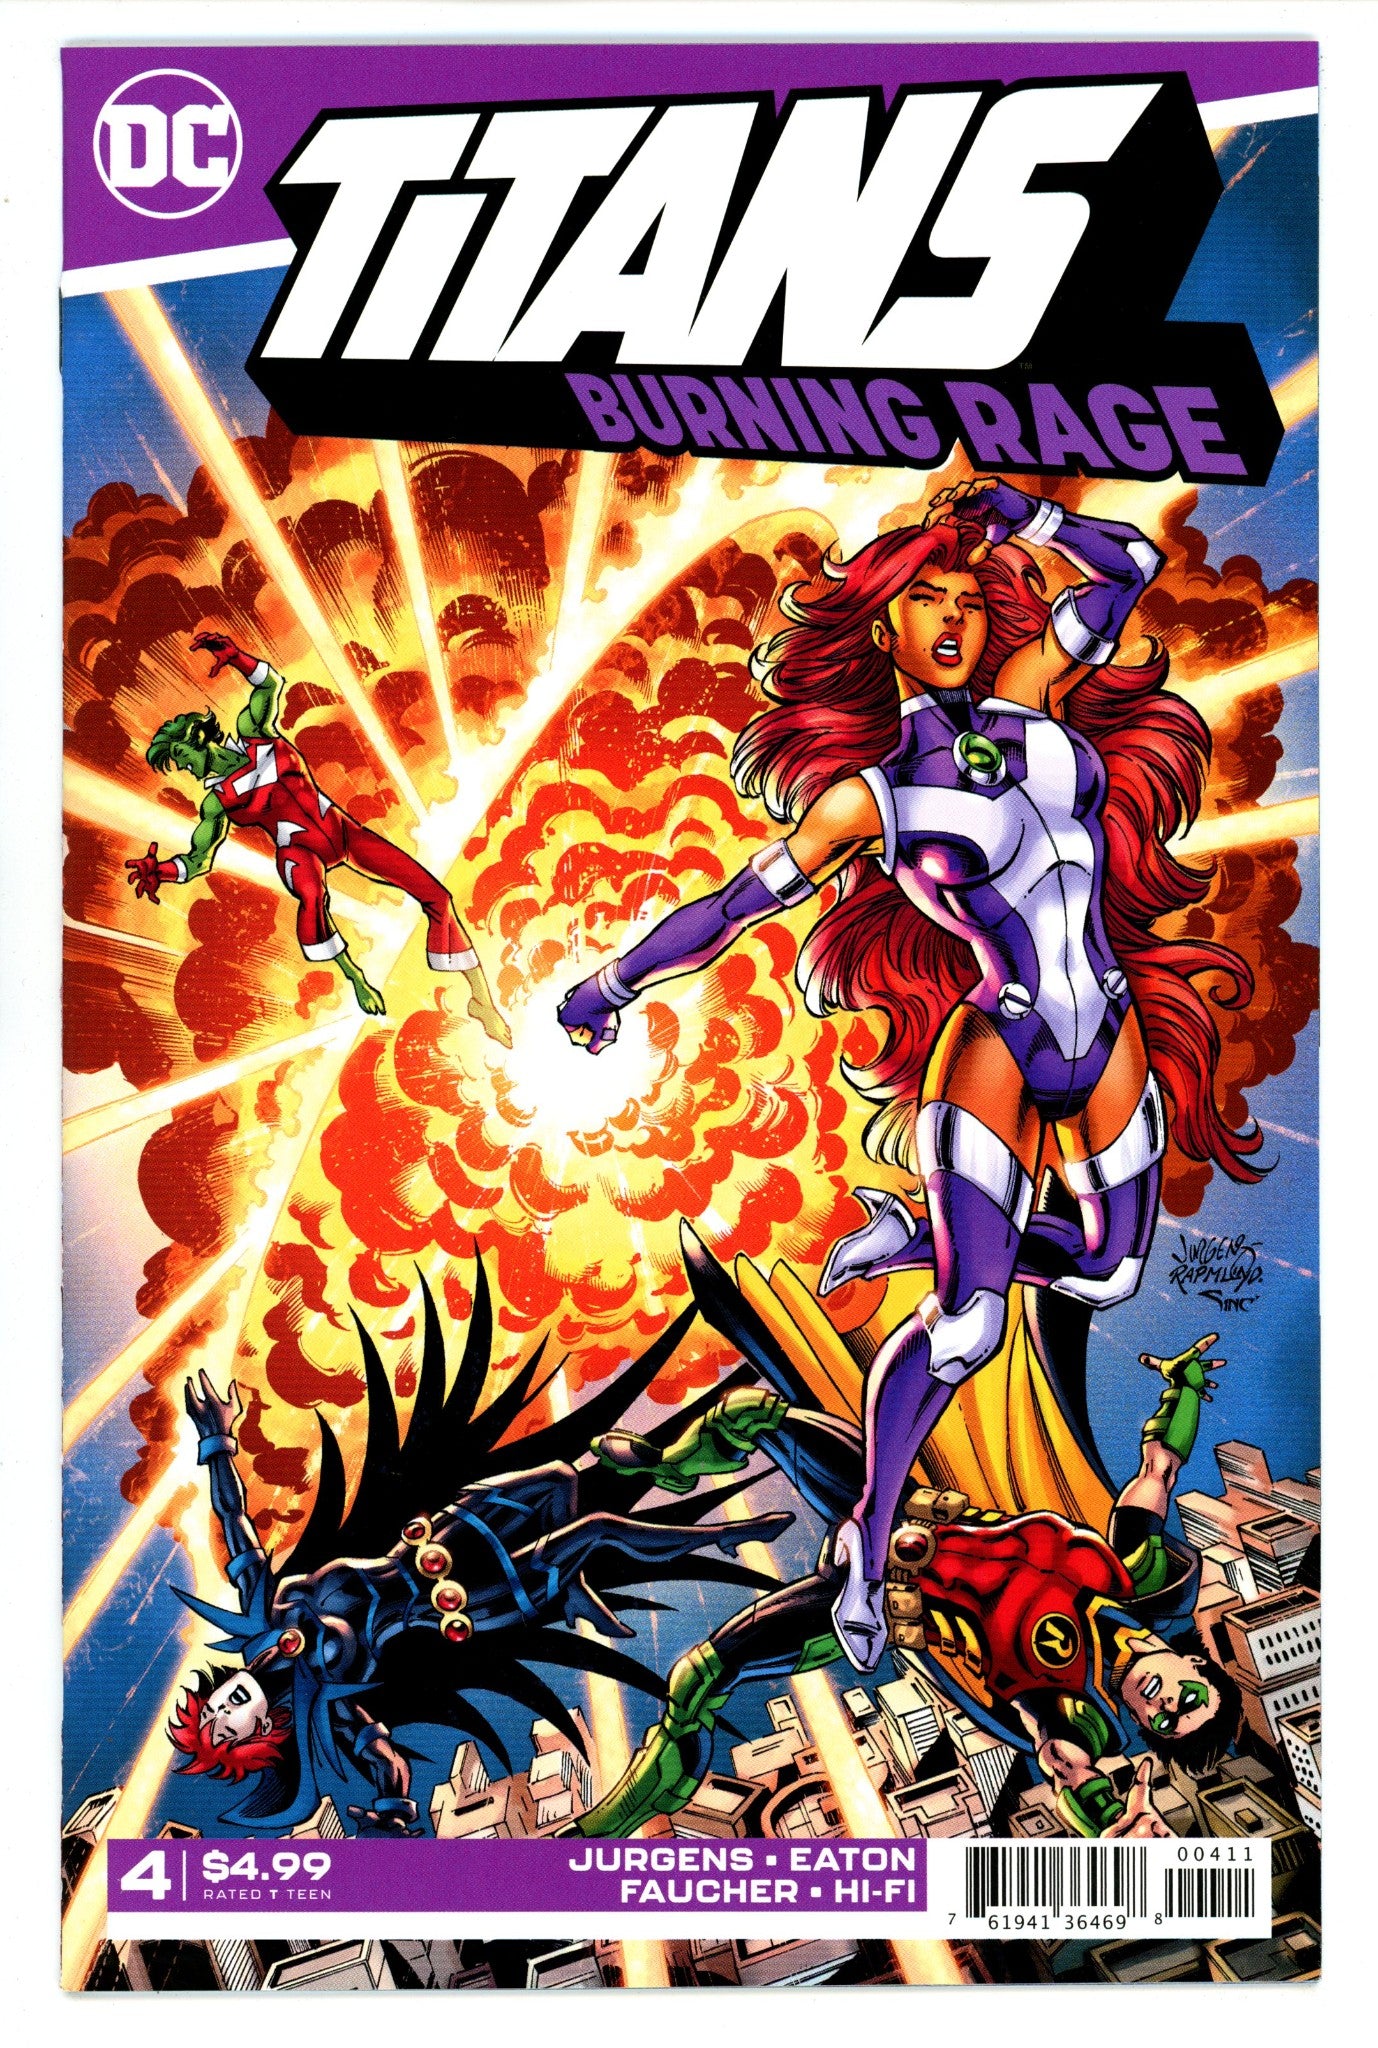 Titans: Burning Rage Vol 3 4 High Grade (2020) 